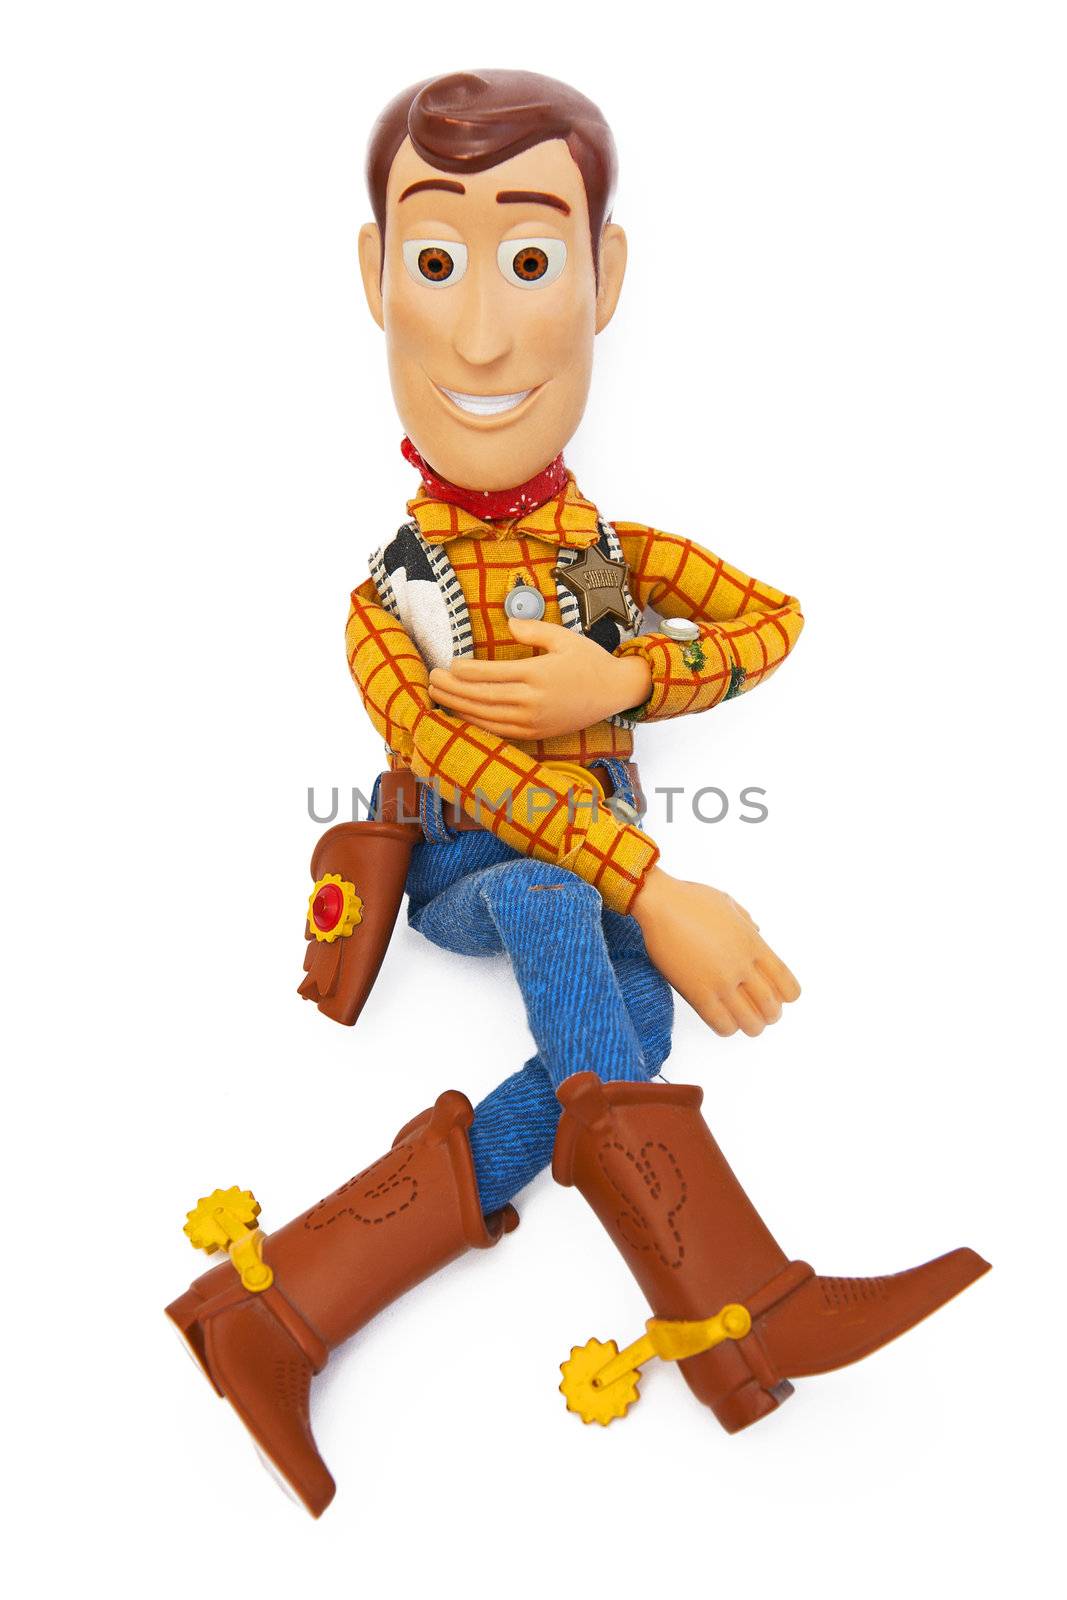 Sheriff Woody - Toy Story